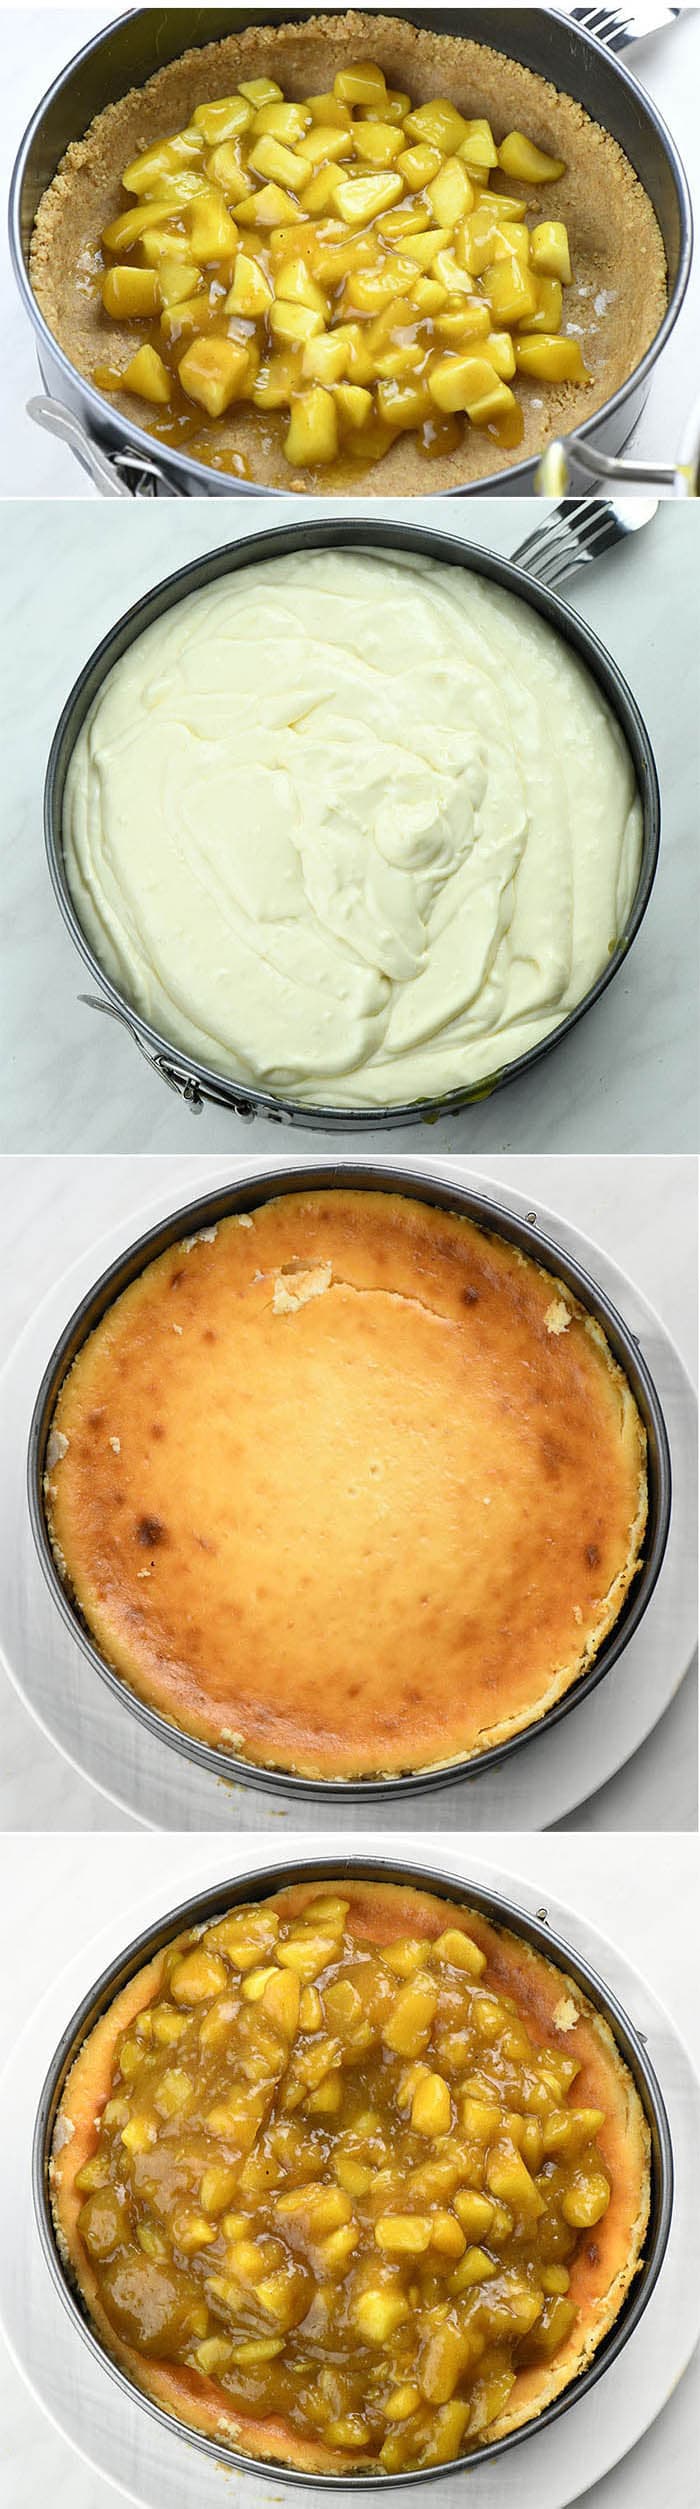 Apple Pie Cheesecake preparation steps 2